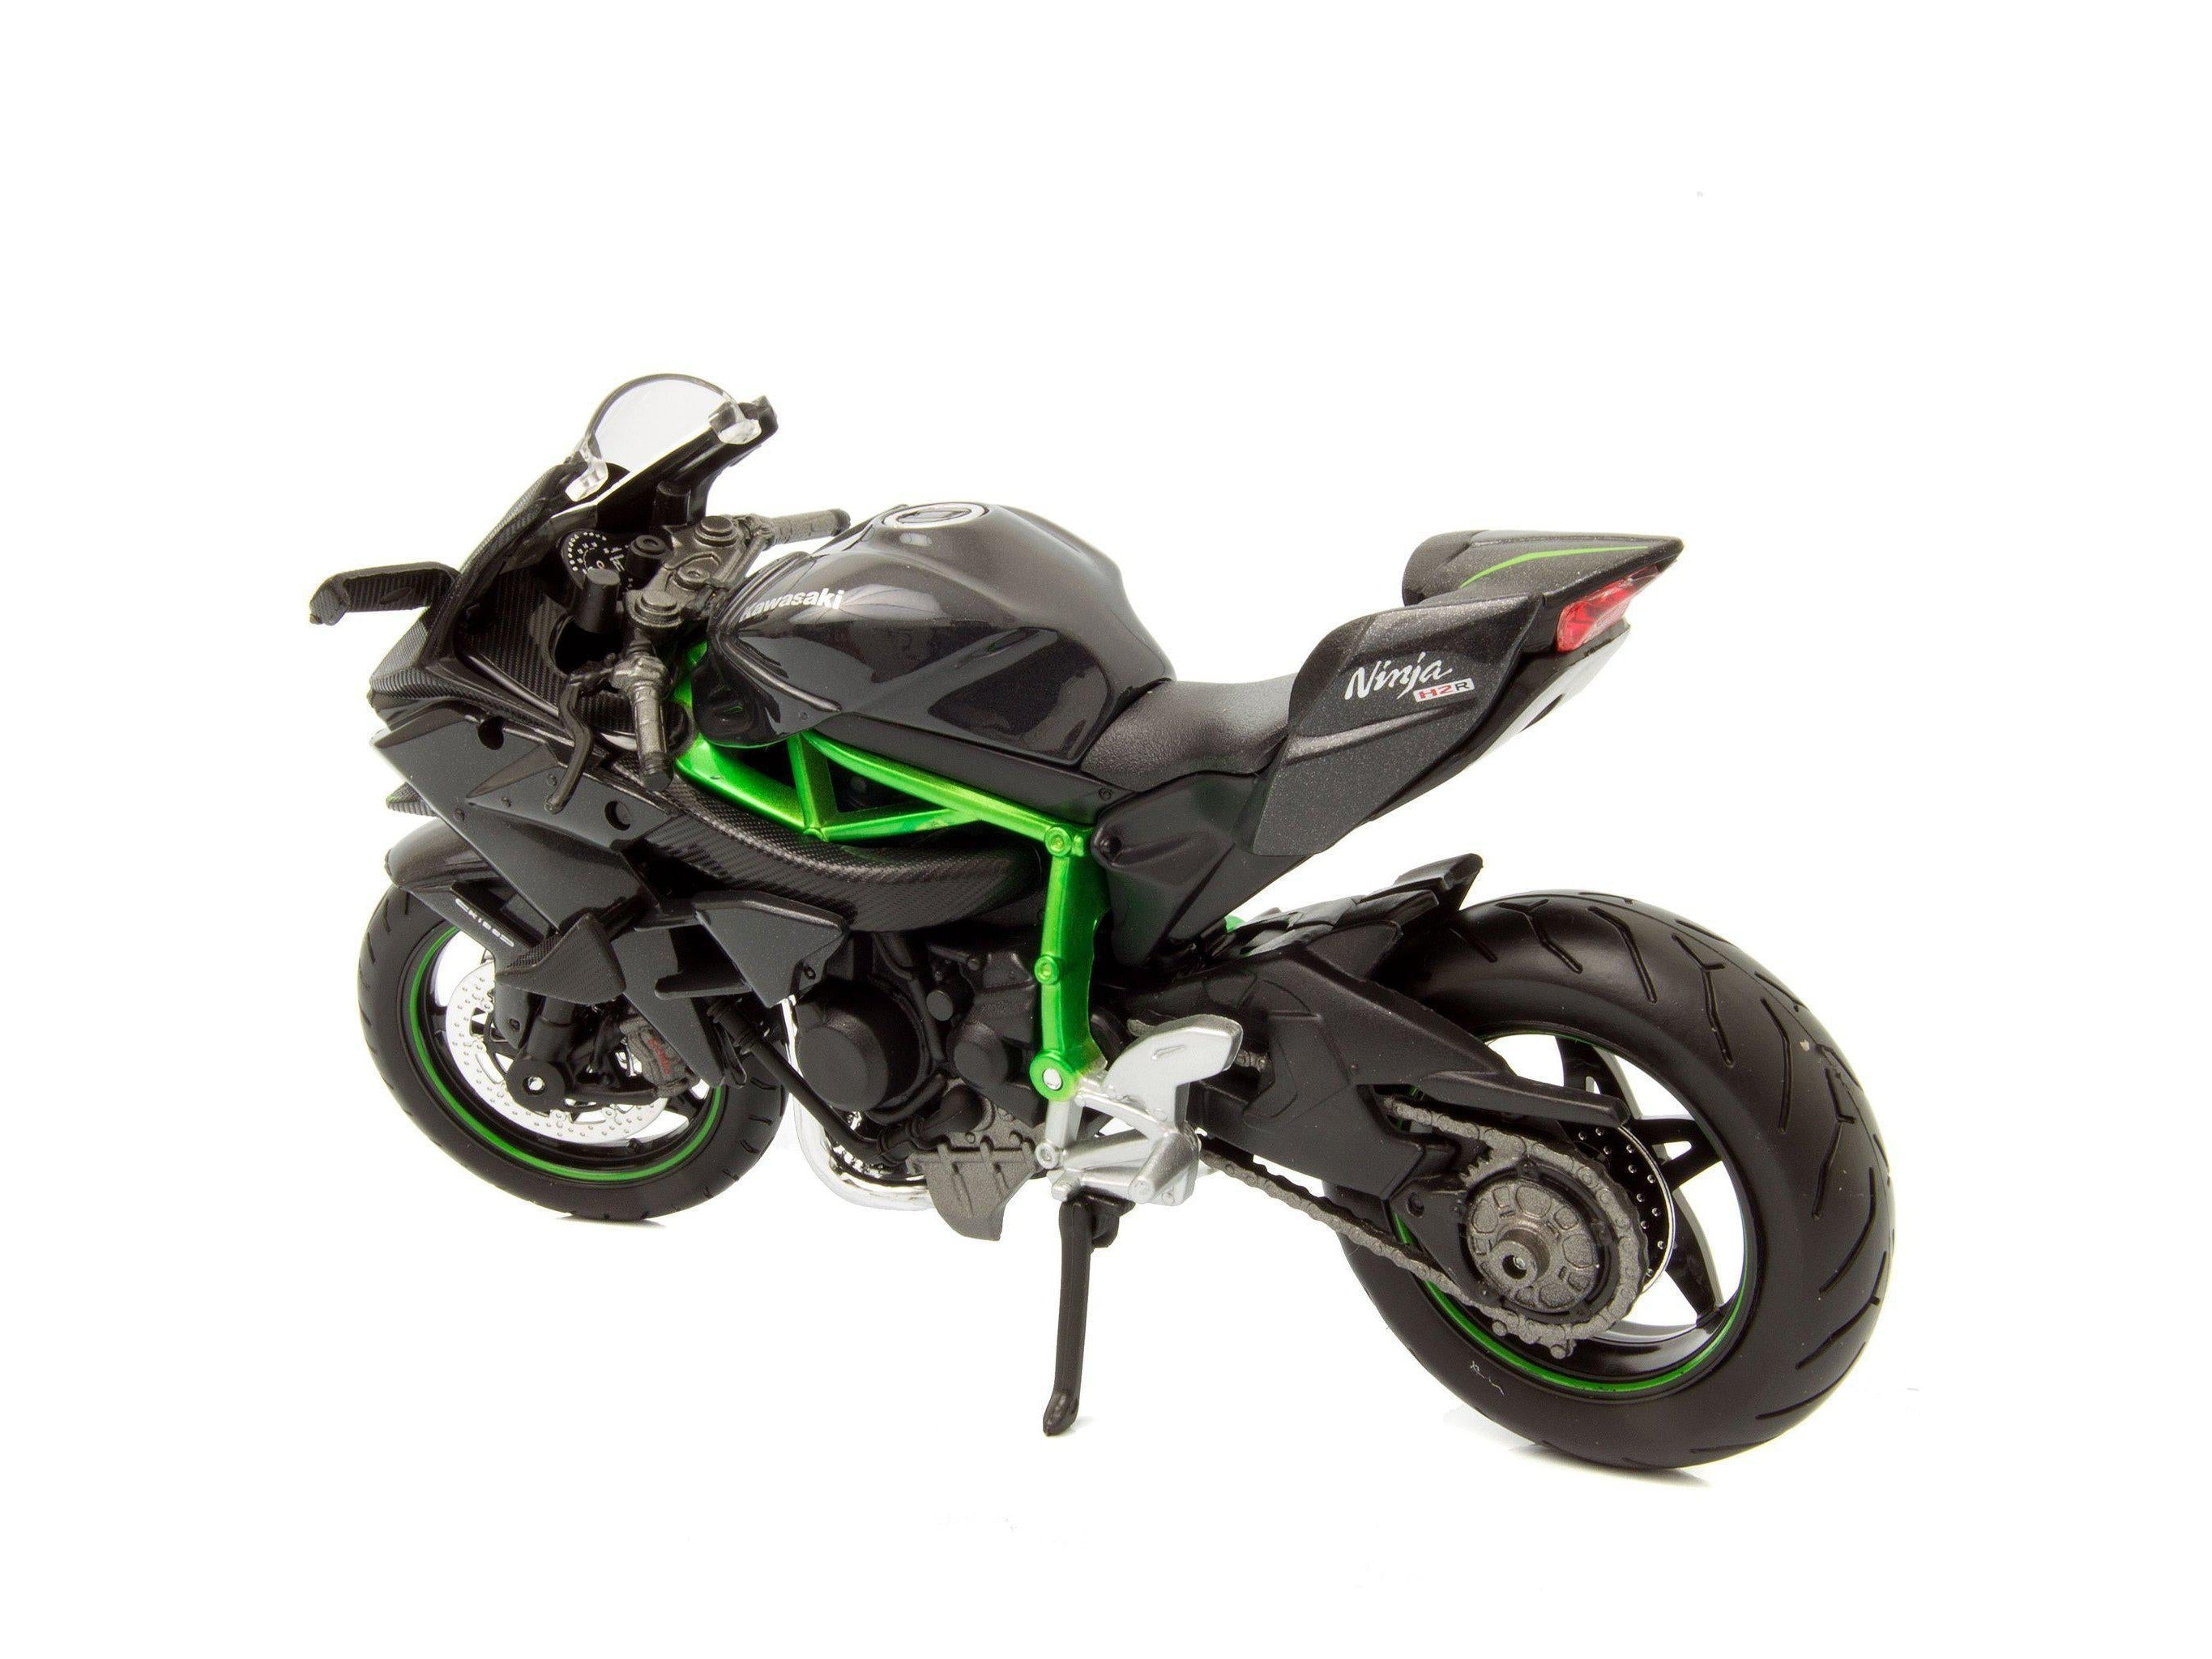 Kawasaki H2 R Ninja Diecast Model Motorcycle grey 1:12